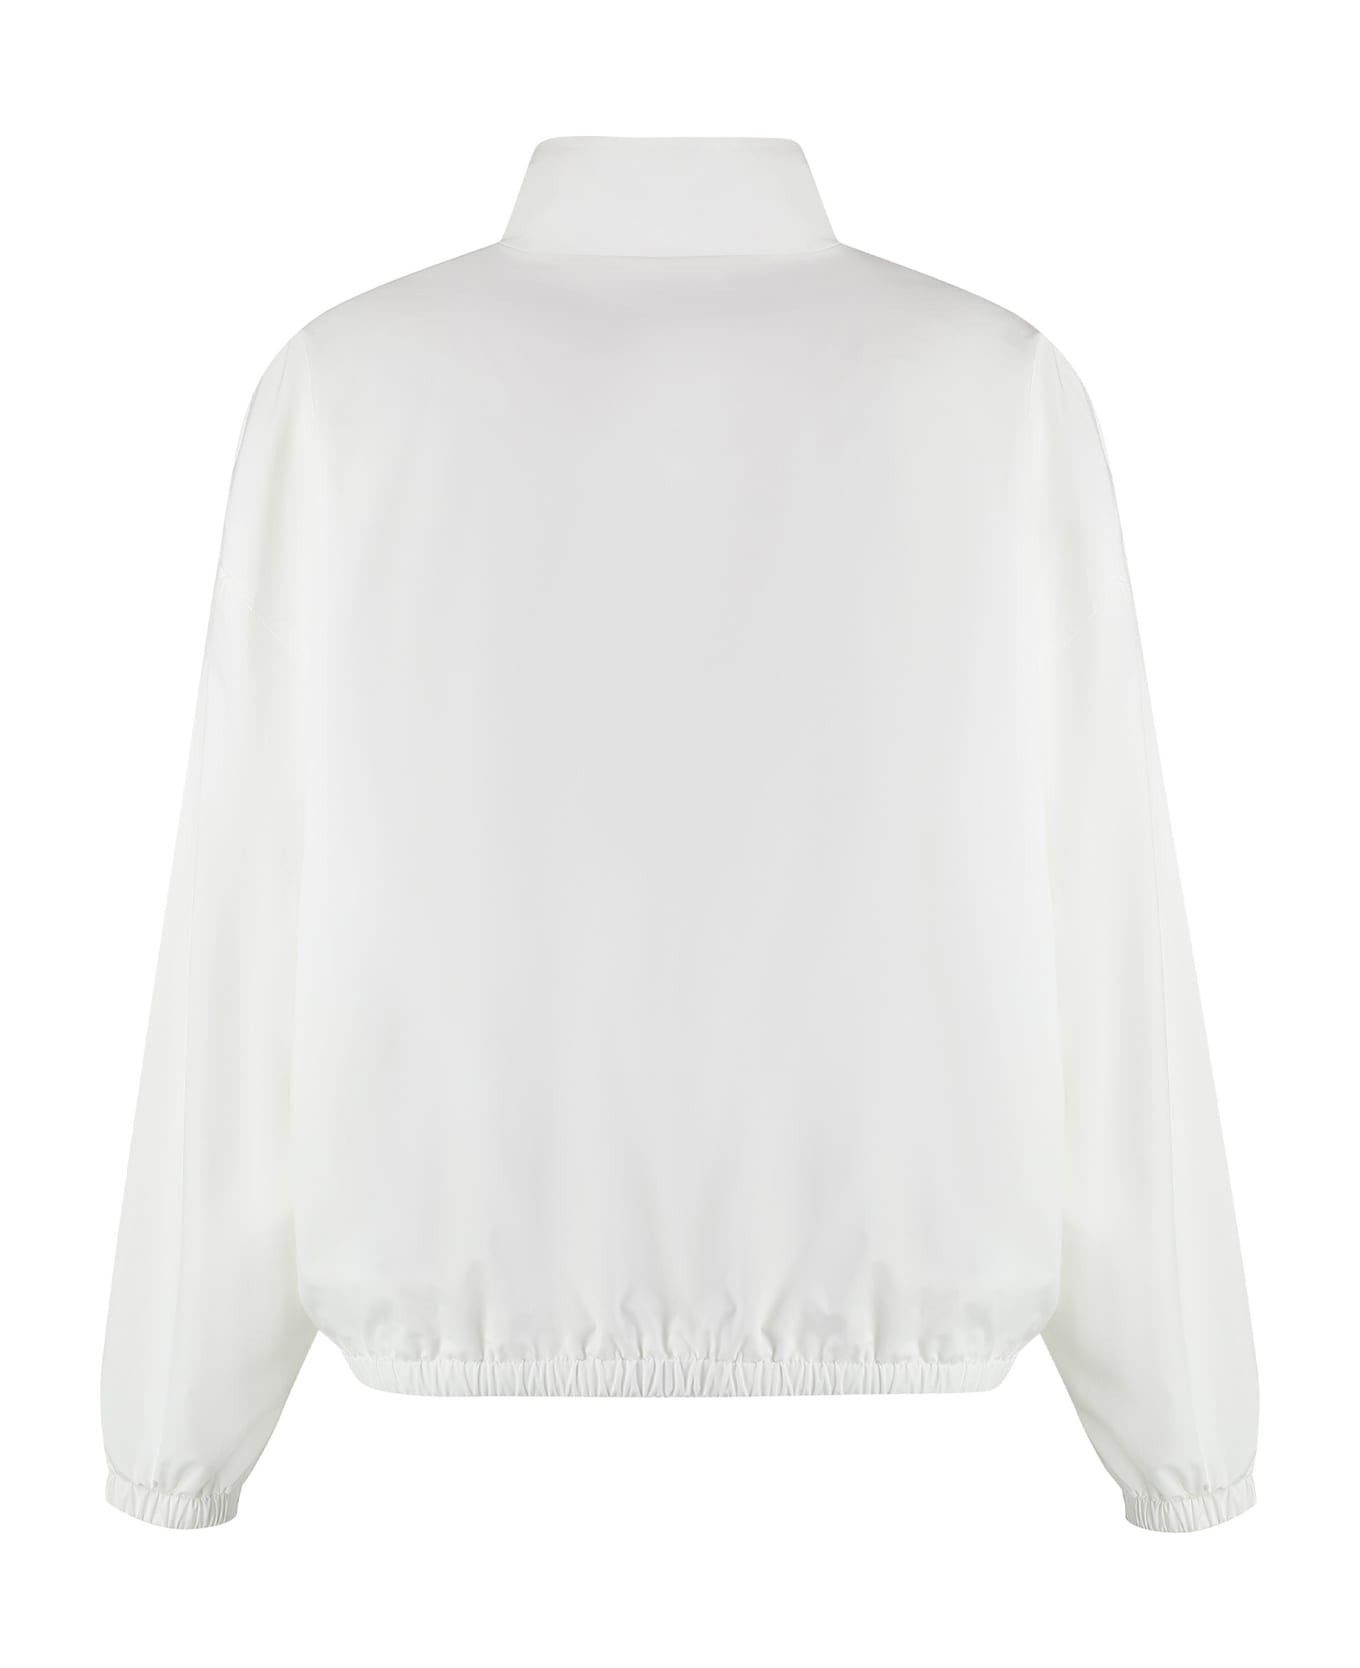 Alexander Wang Techno Fabric Jacket - White